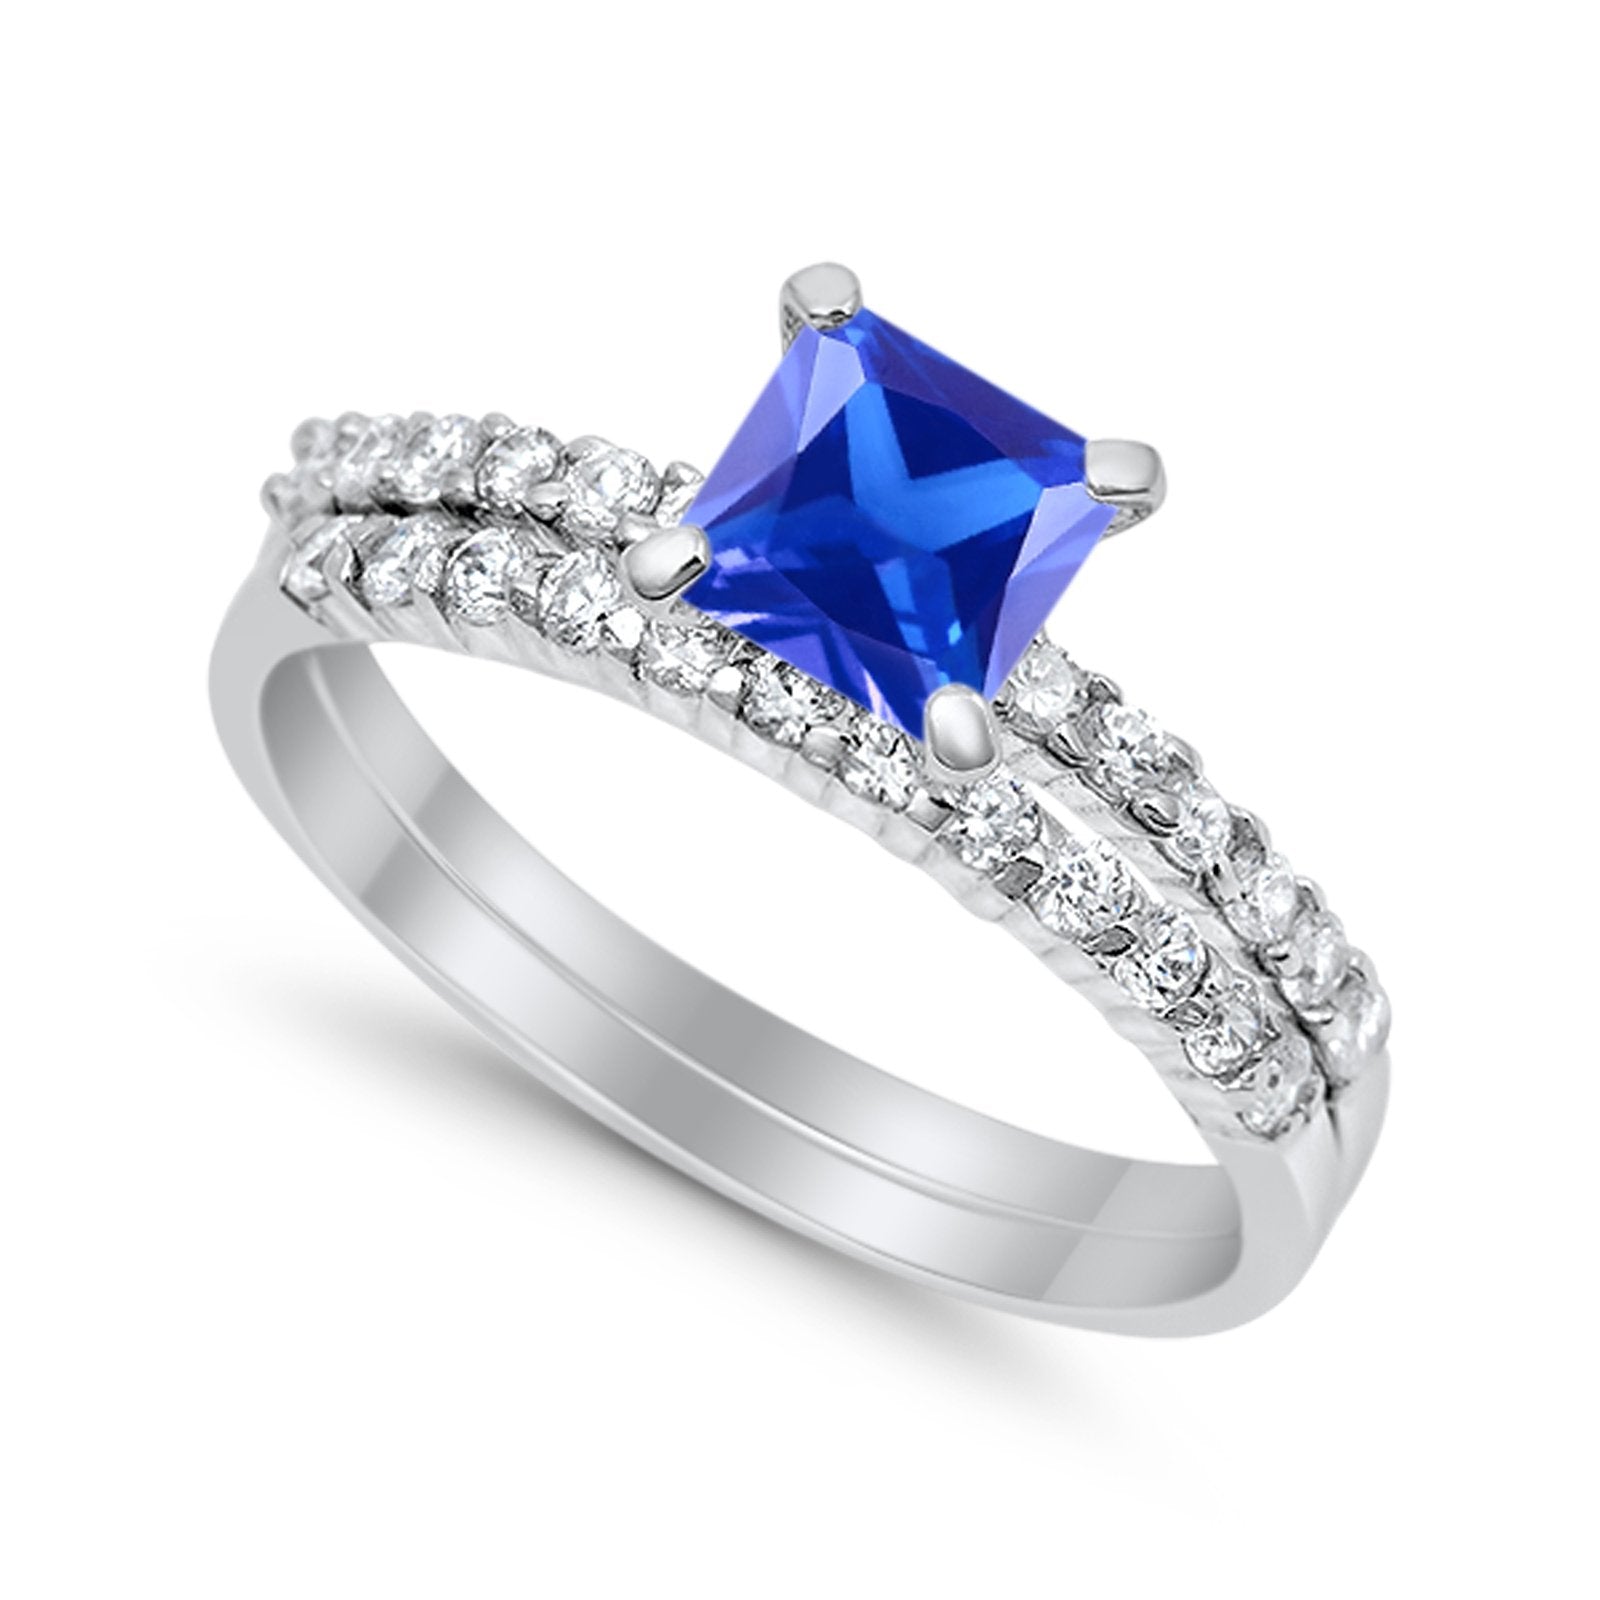 Bridal Set Princess Cut Simulated Cubic Zirconia 925 Sterling Silver Engagement Ring